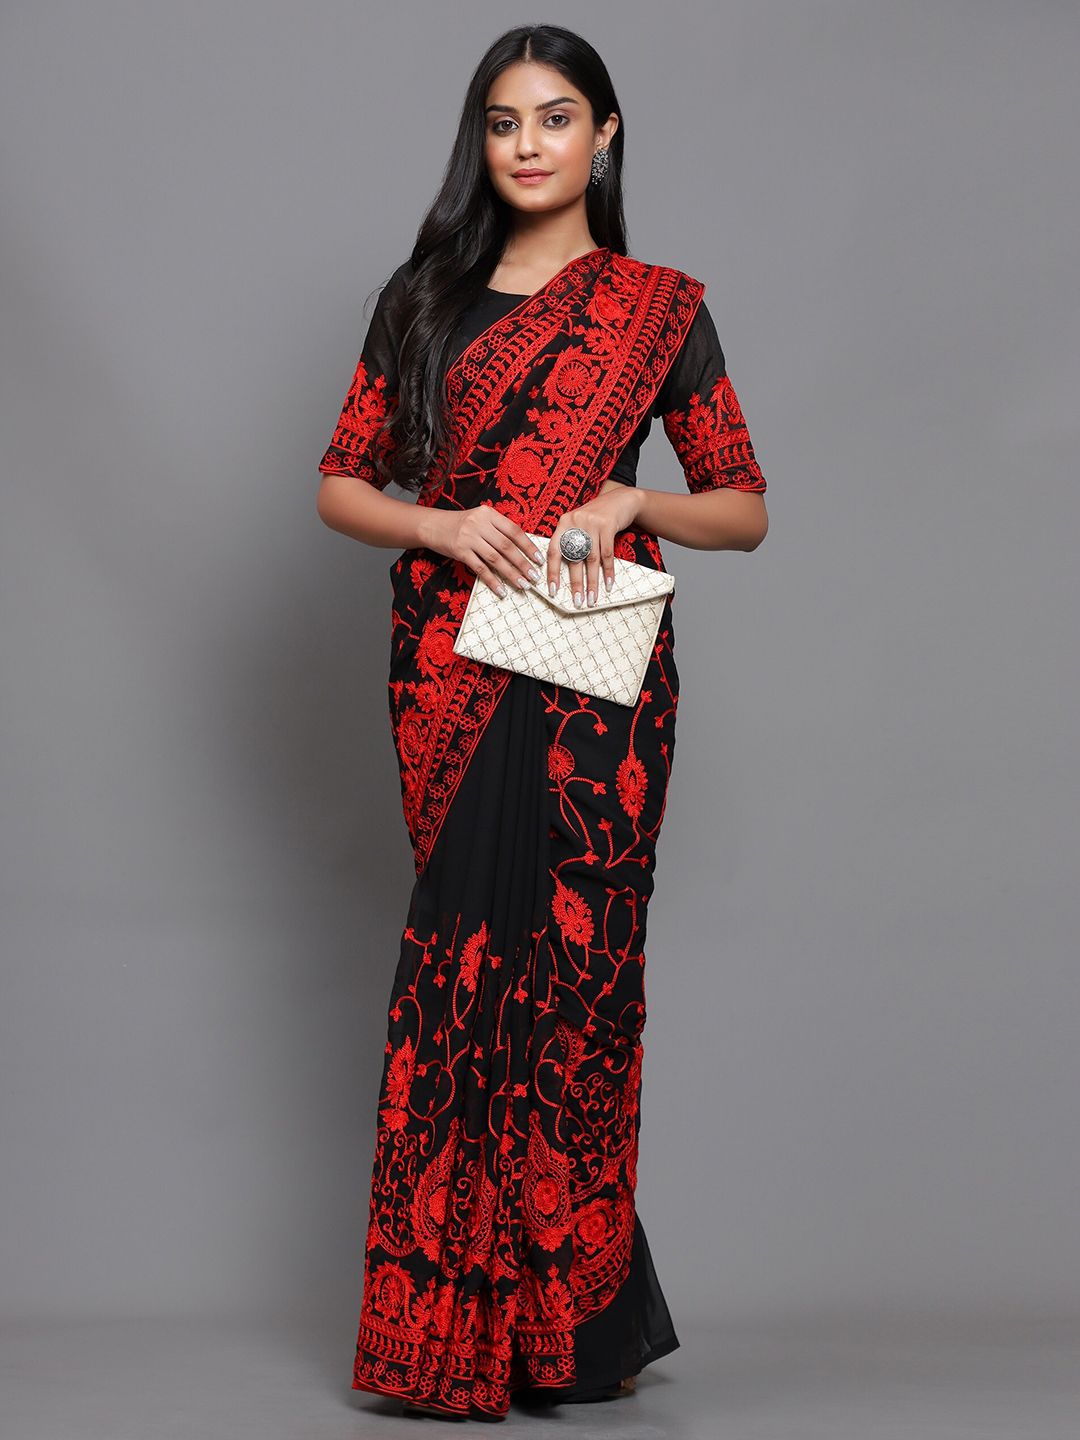 3BUDDY FASHION Red & Black Floral Embroidered Venkatgiri Saree Price in India